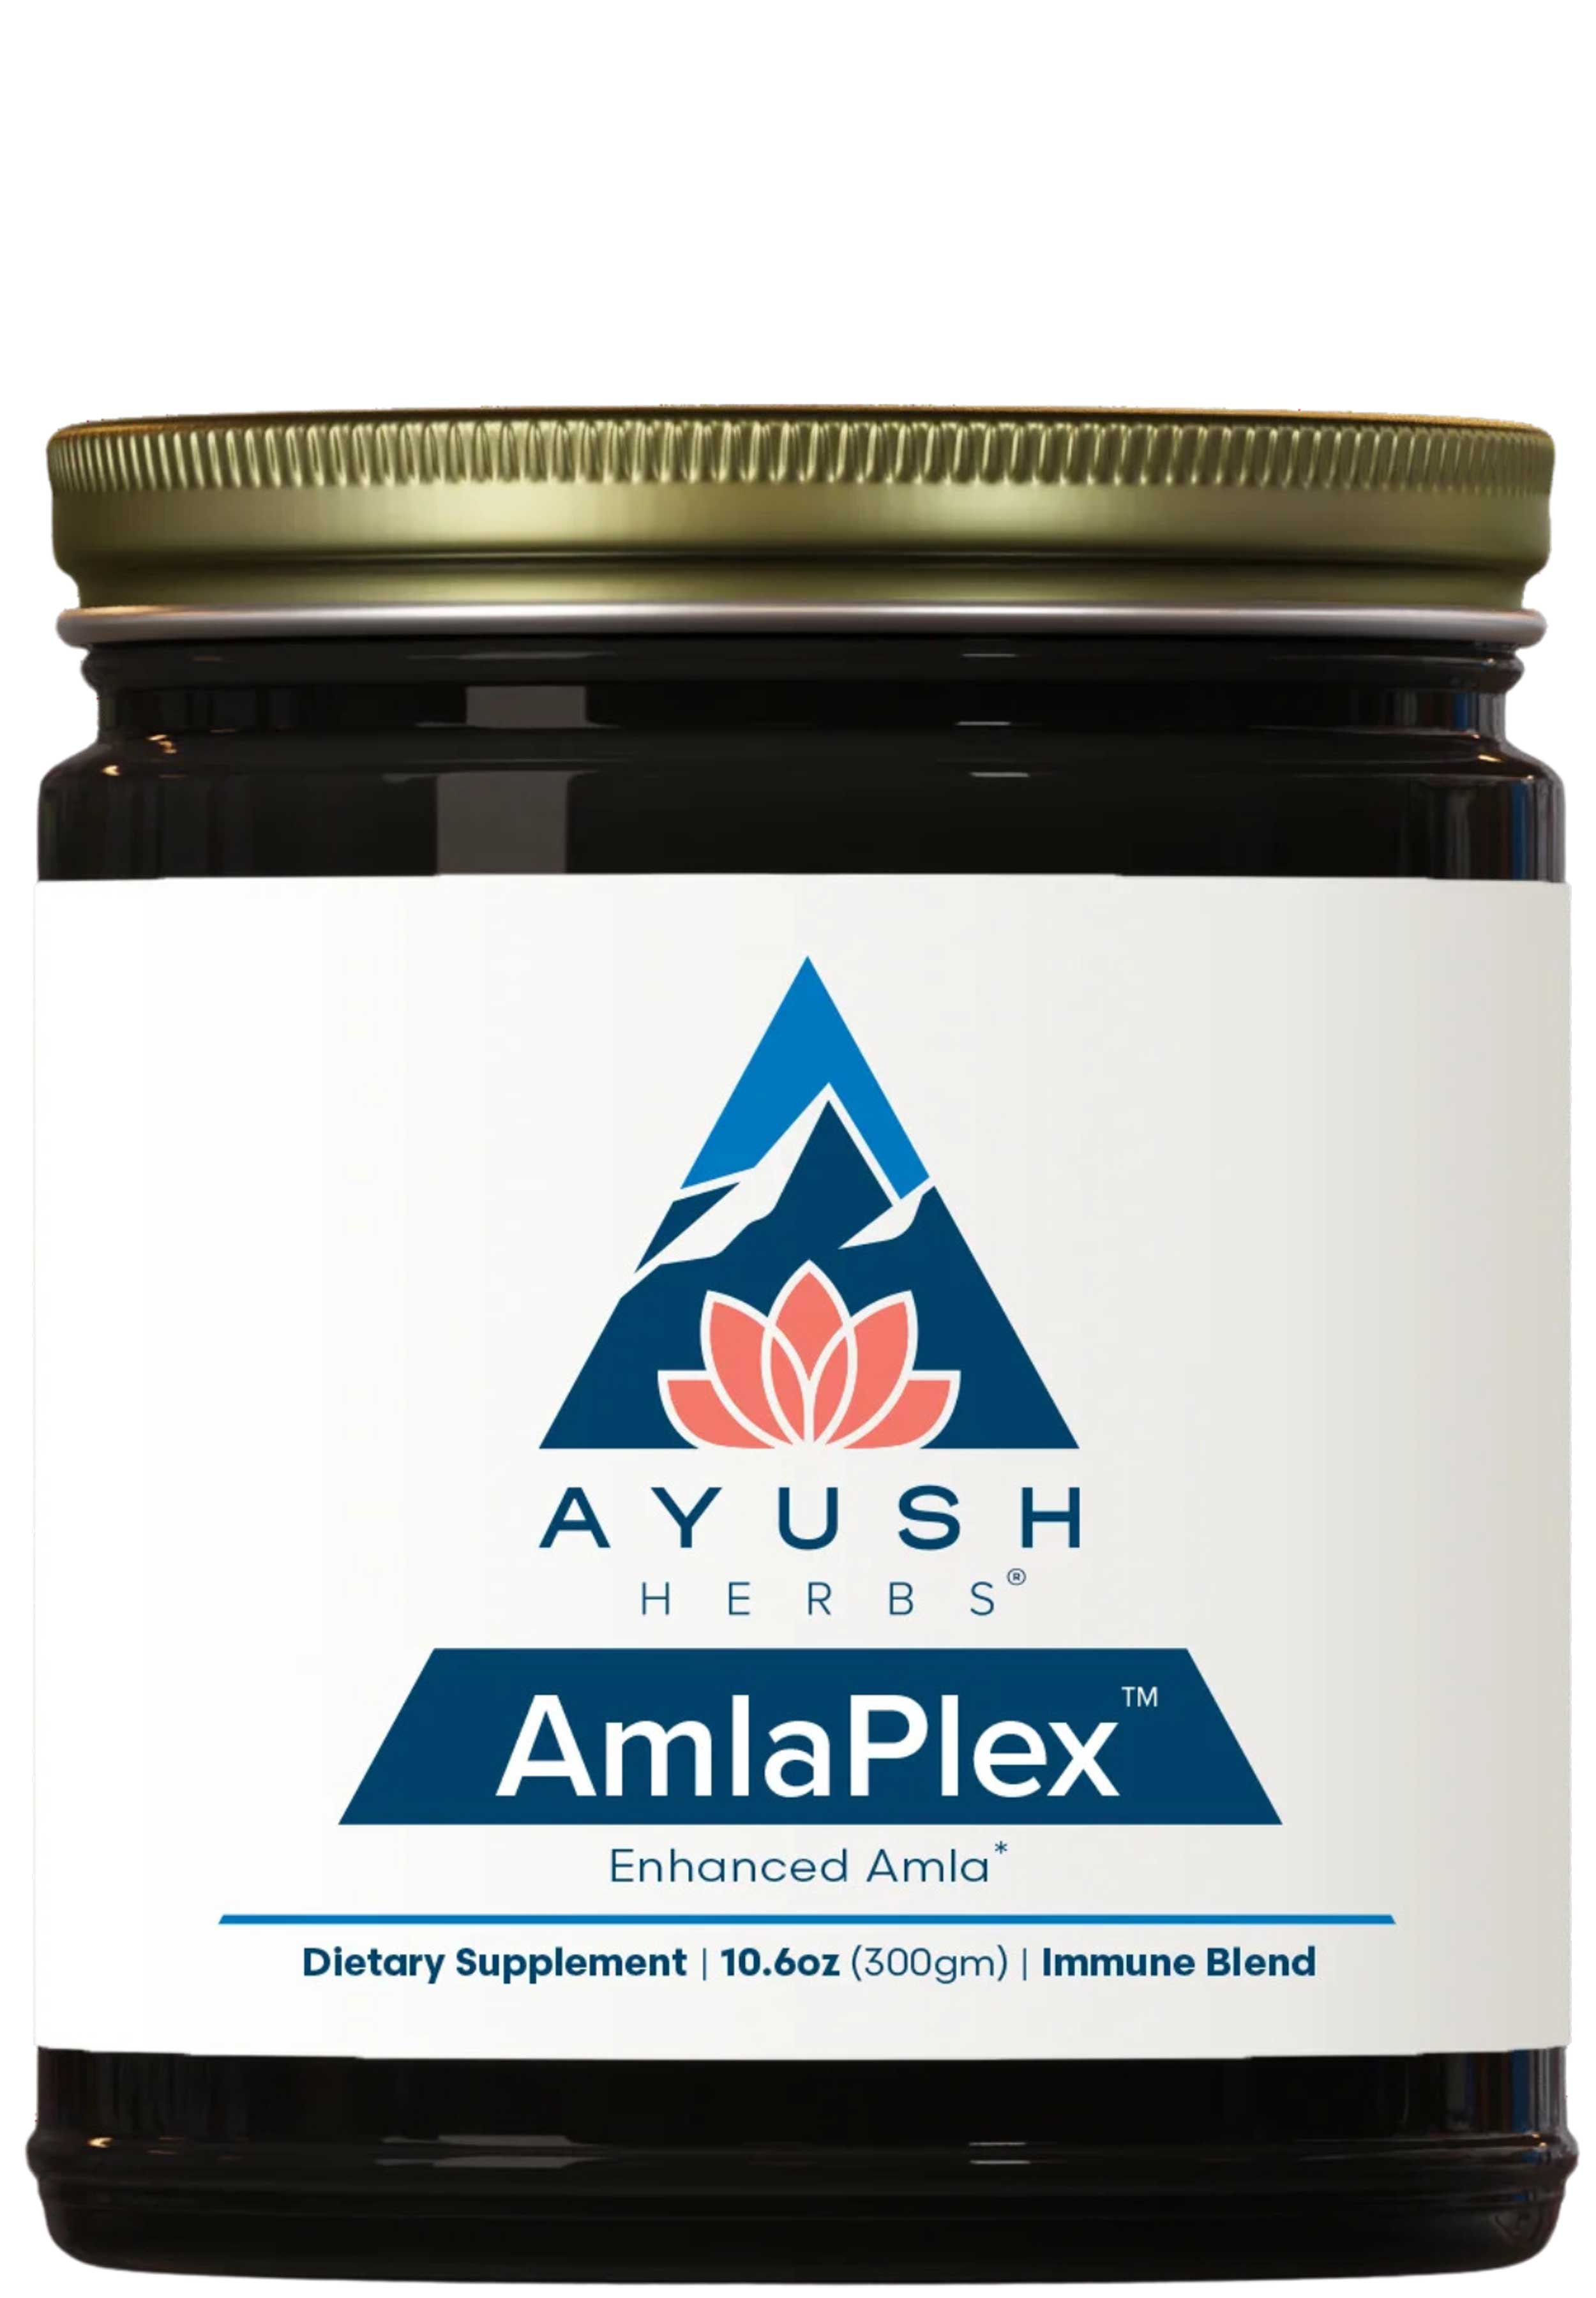 Ayush Herbs AmlaPlex